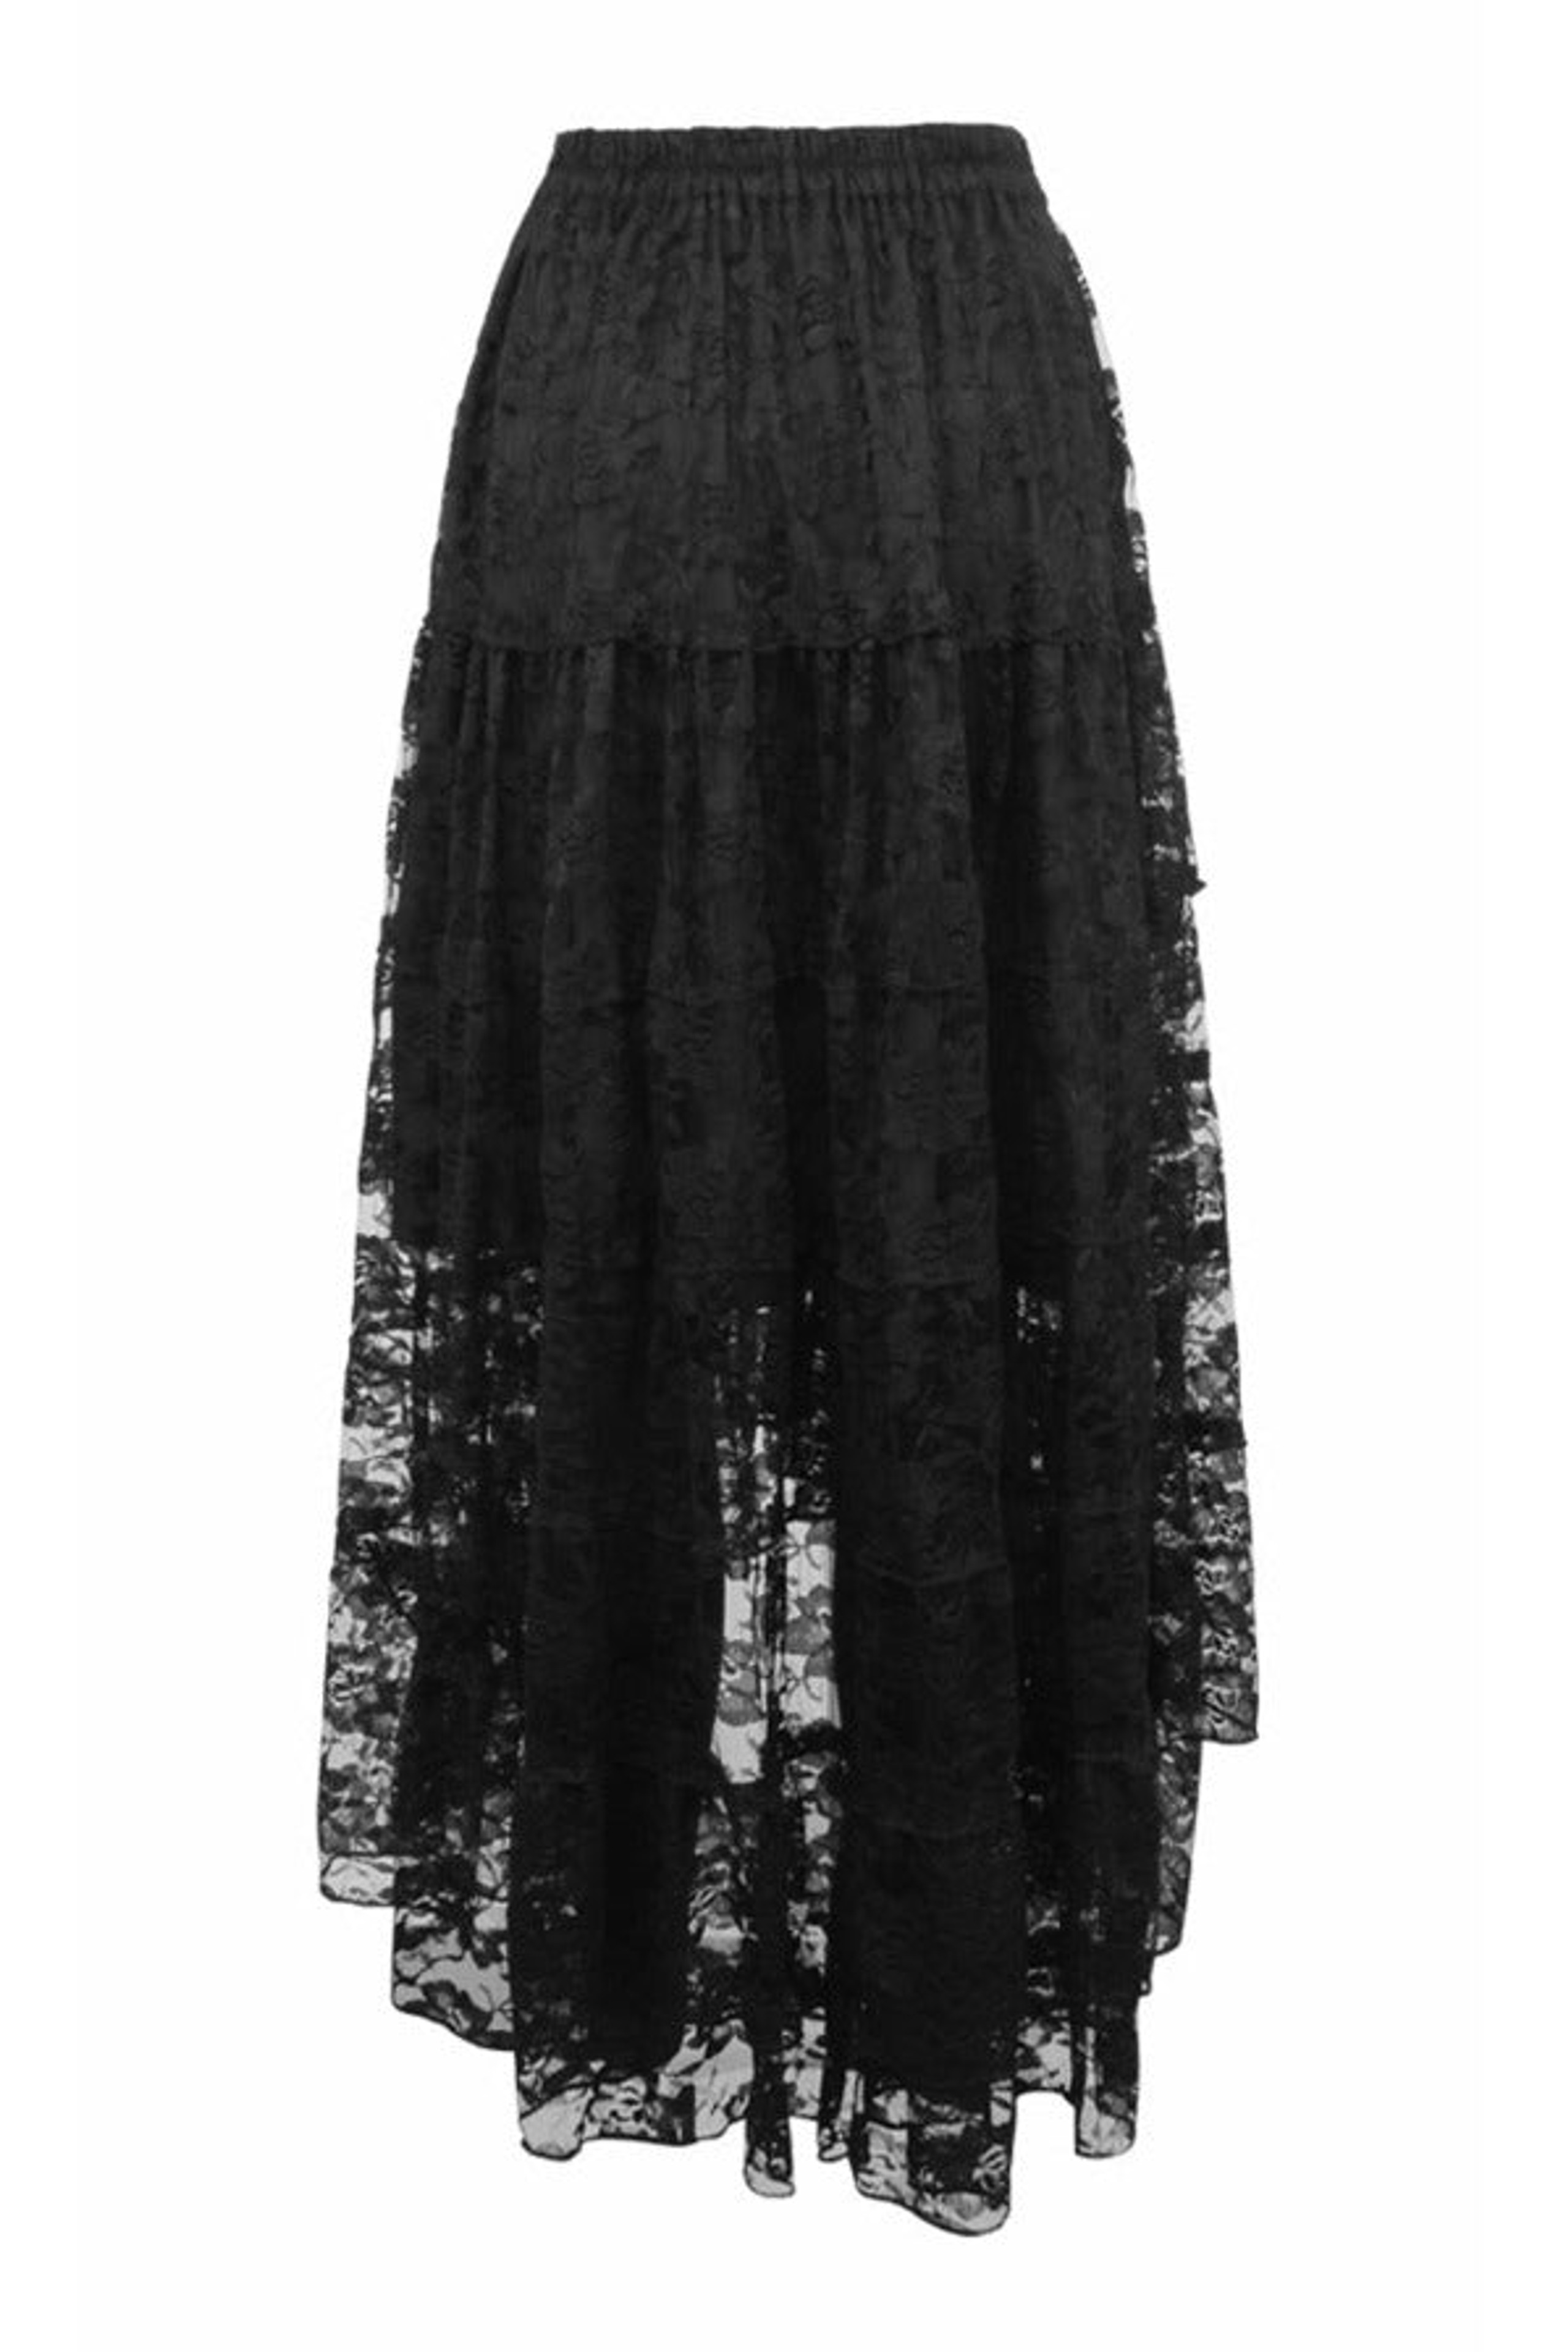 Black Lace Skirt - Goodgoth.com